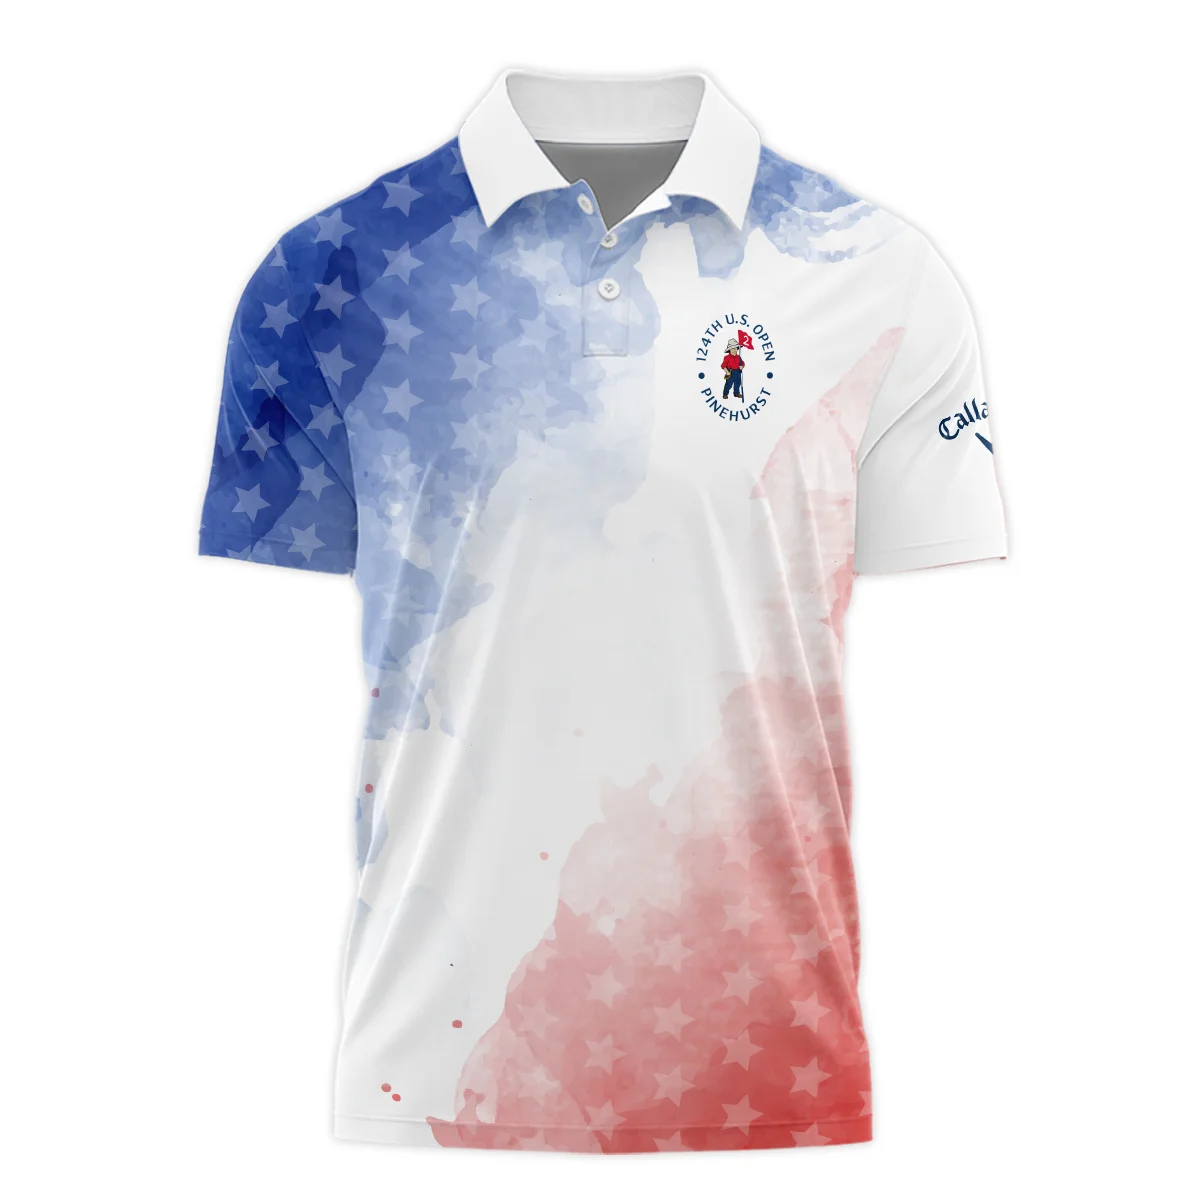 124th U.S. Open Pinehurst Golf Callaway Polo Shirt Stars Blue Red Watercolor Golf Sports All Over Print Polo Shirt For Men